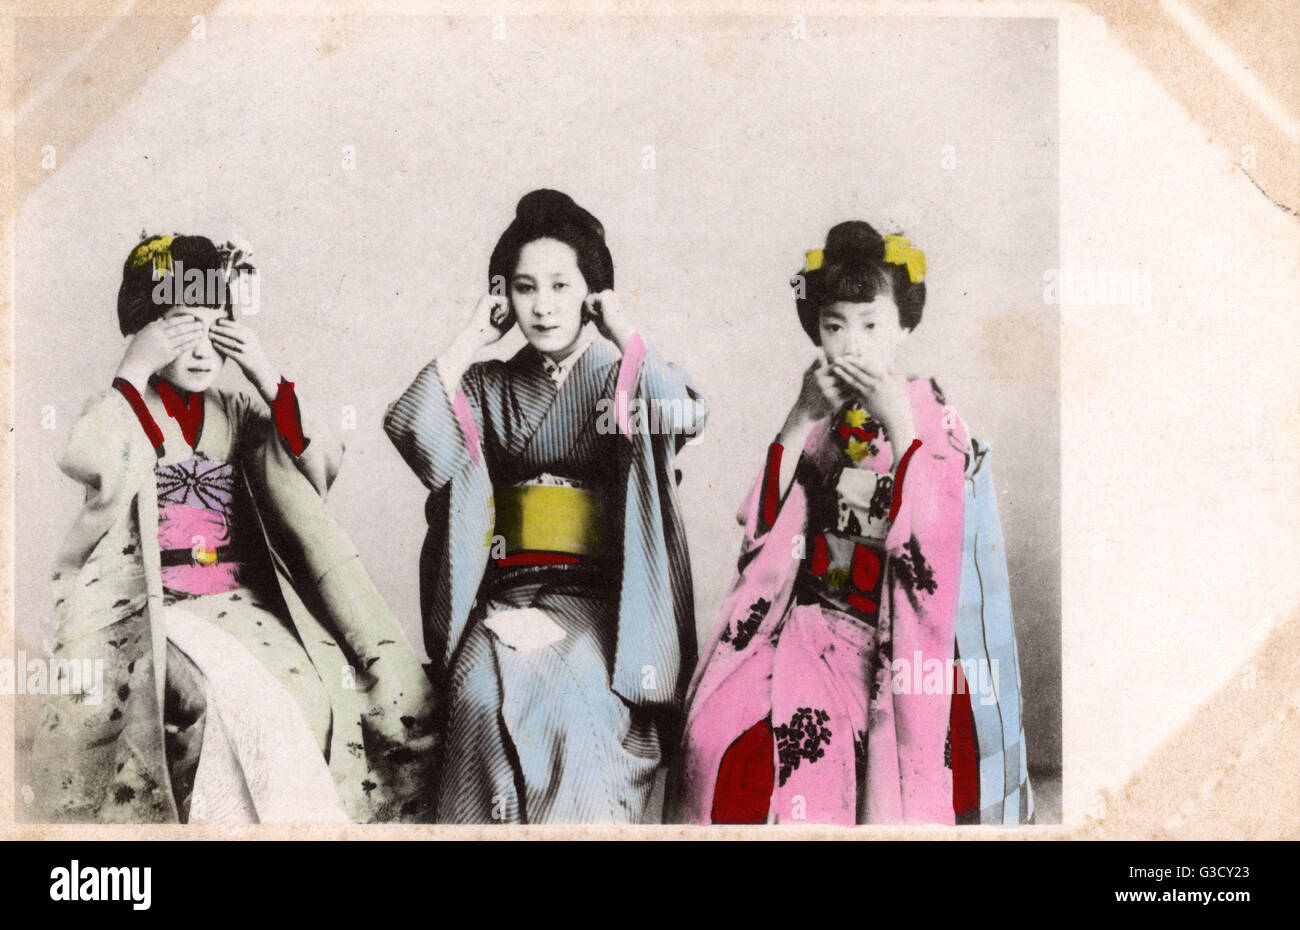 Japon - Geisha - ne voyez pas de mal, n'entendez pas de mal, ne parlez pas de mal Banque D'Images